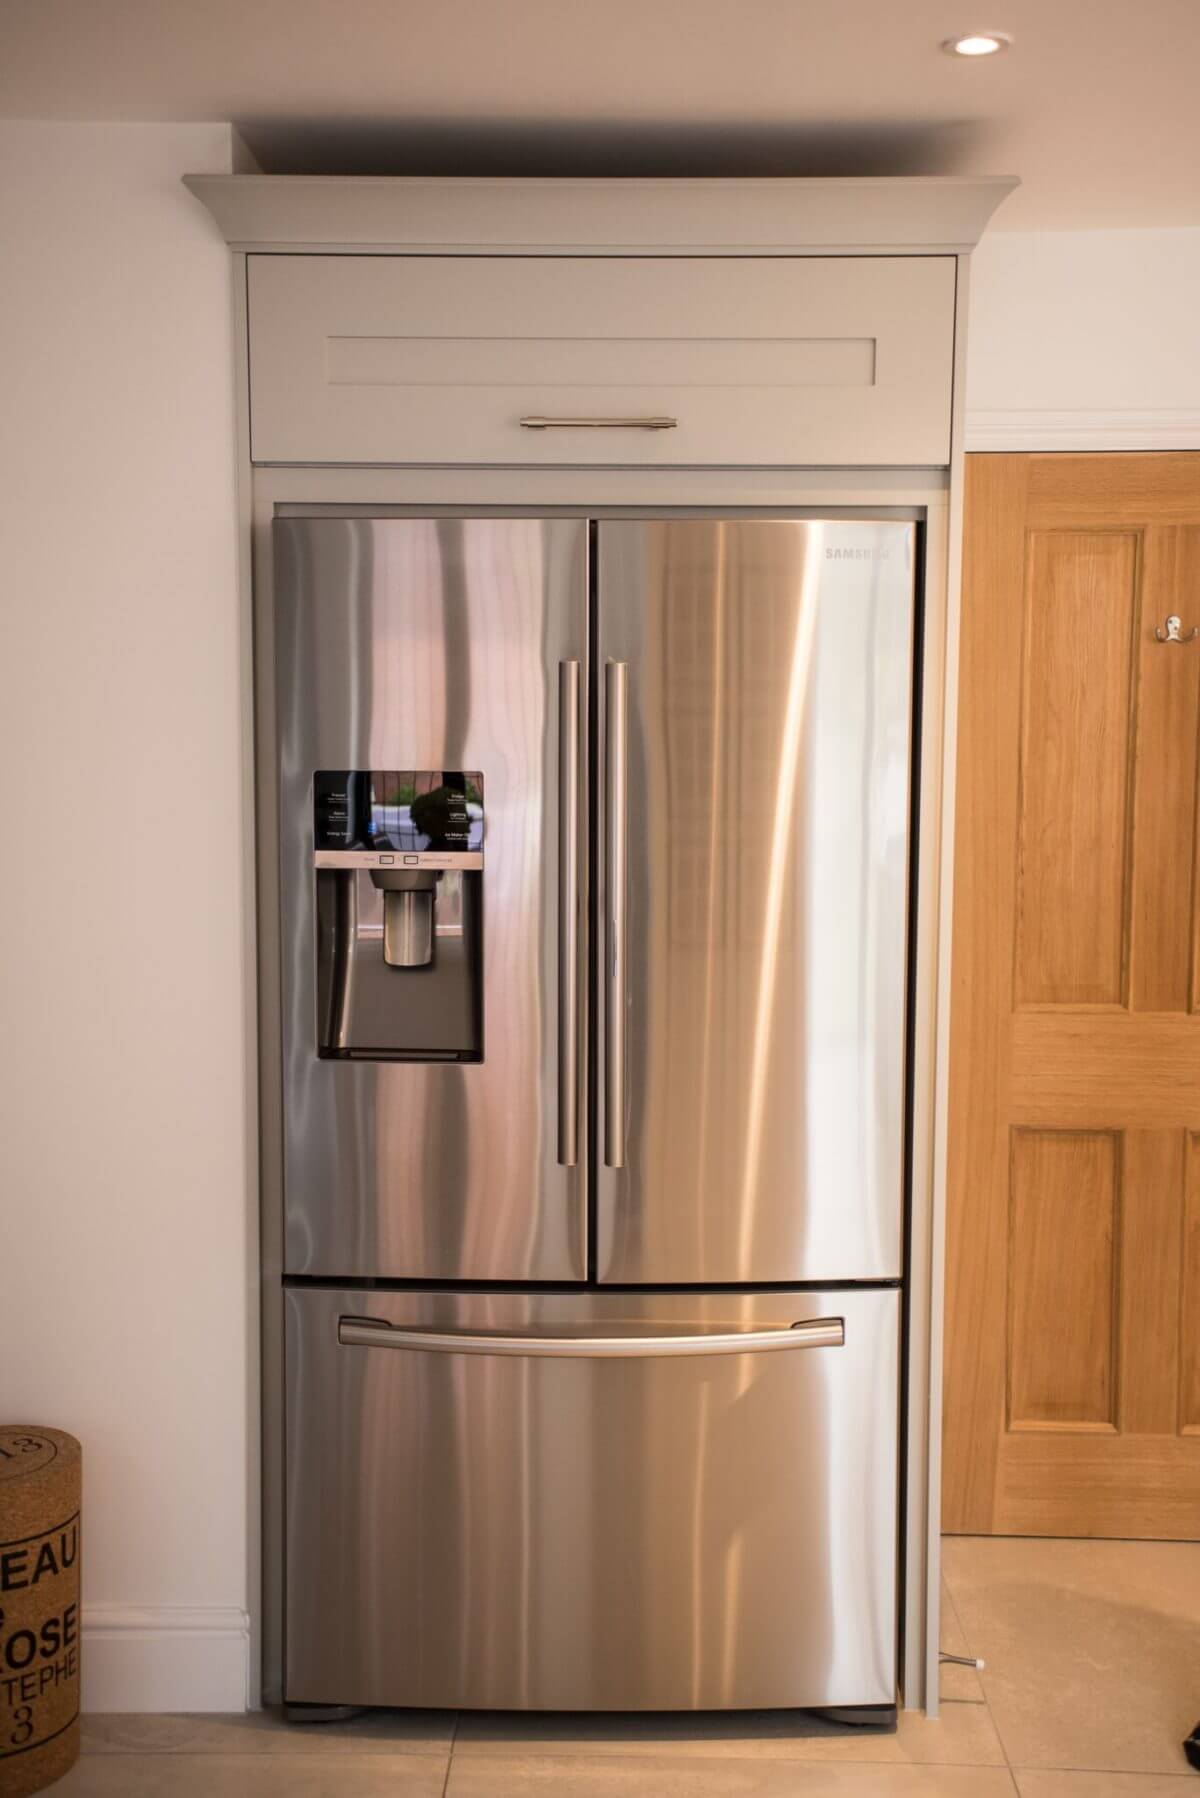 Bespoke cabinetry to house the american fridge freezer - Kitchen Ergonomics